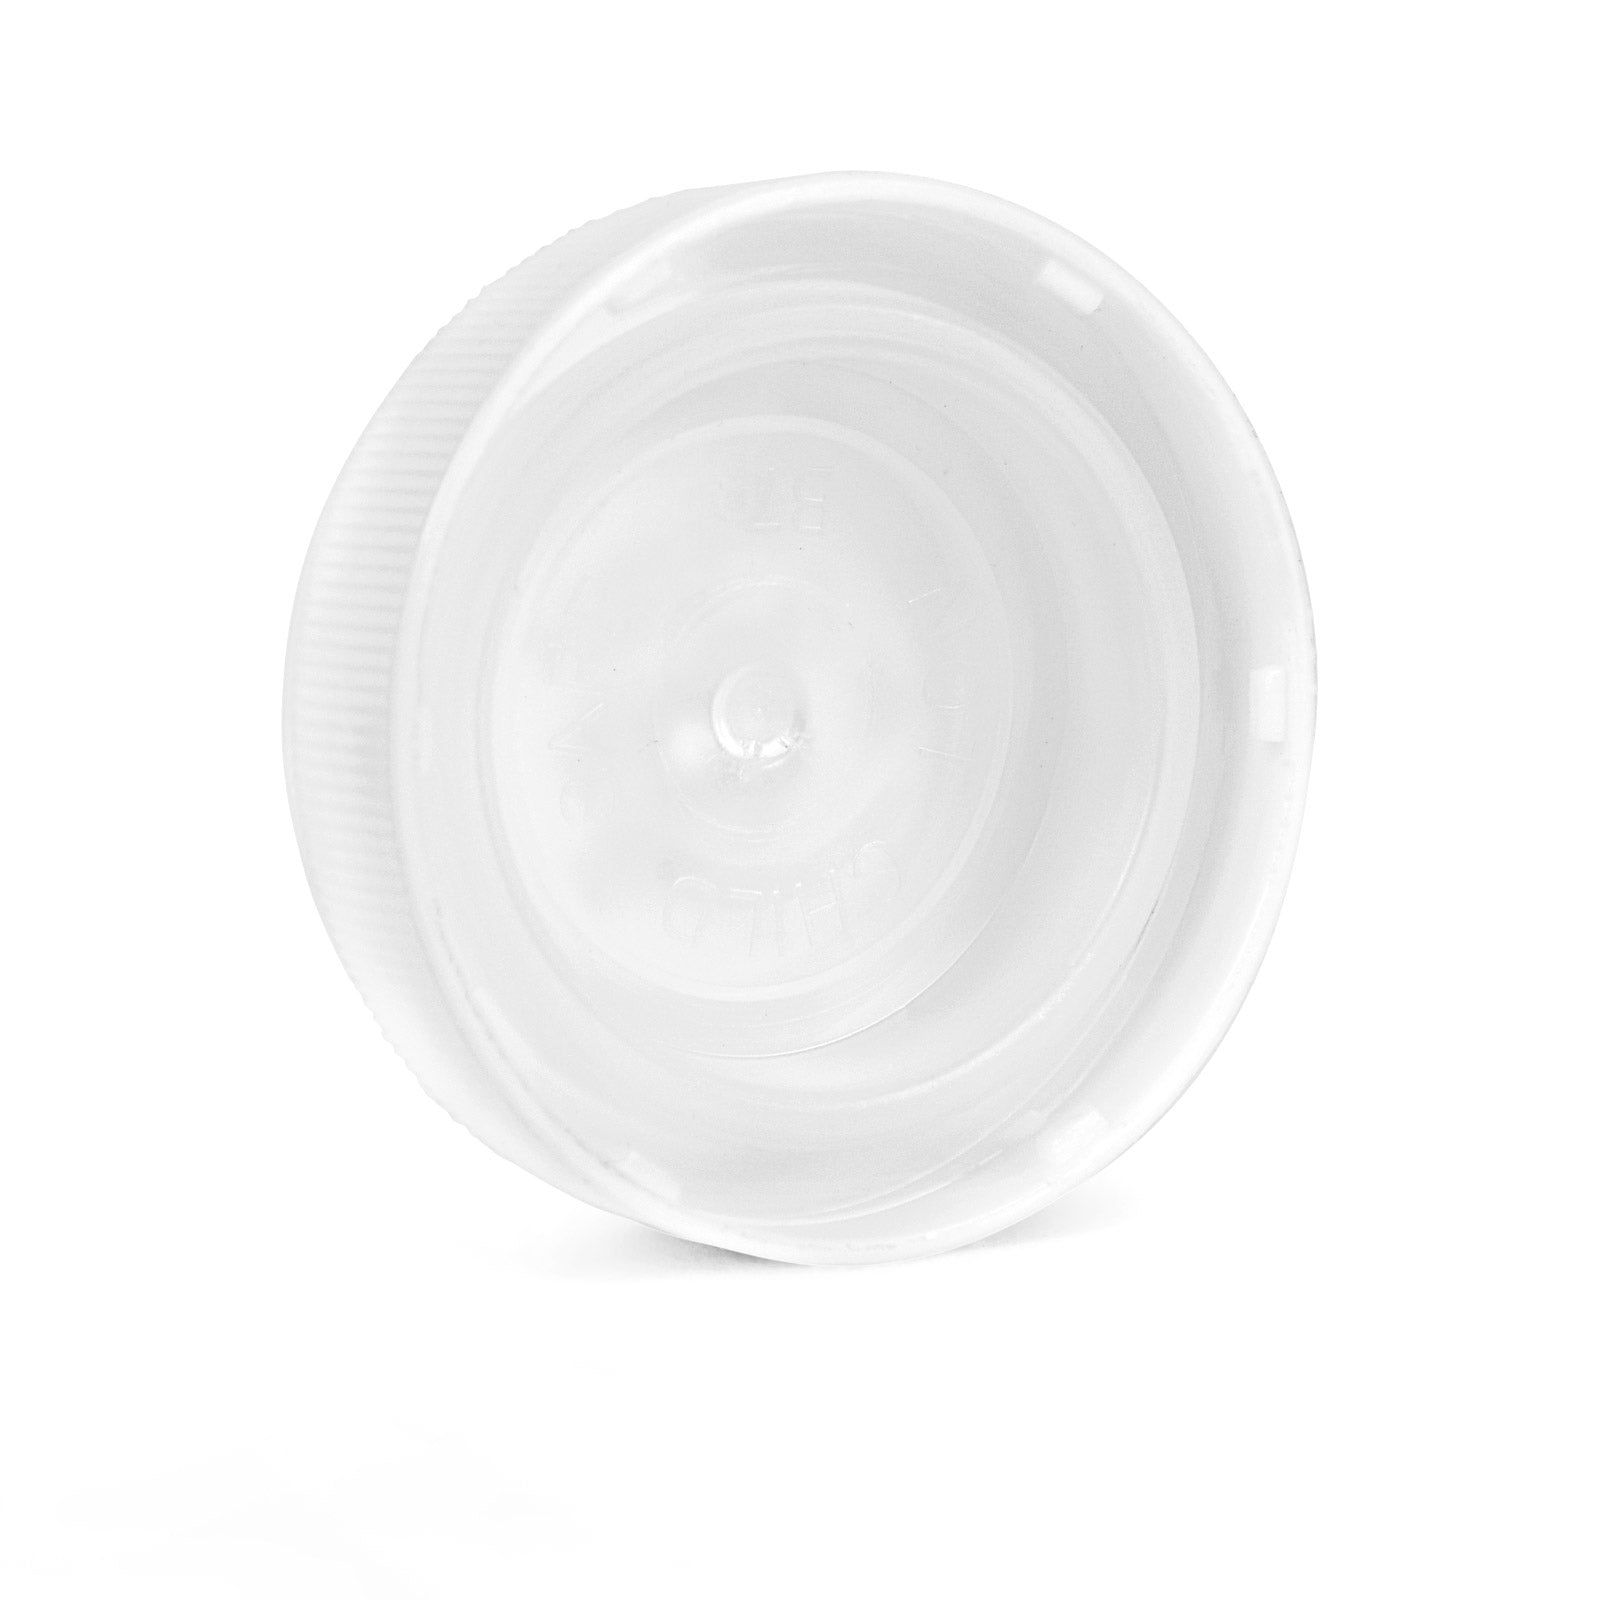 40 Dram Reversible Cap Opaque White - 150 Count